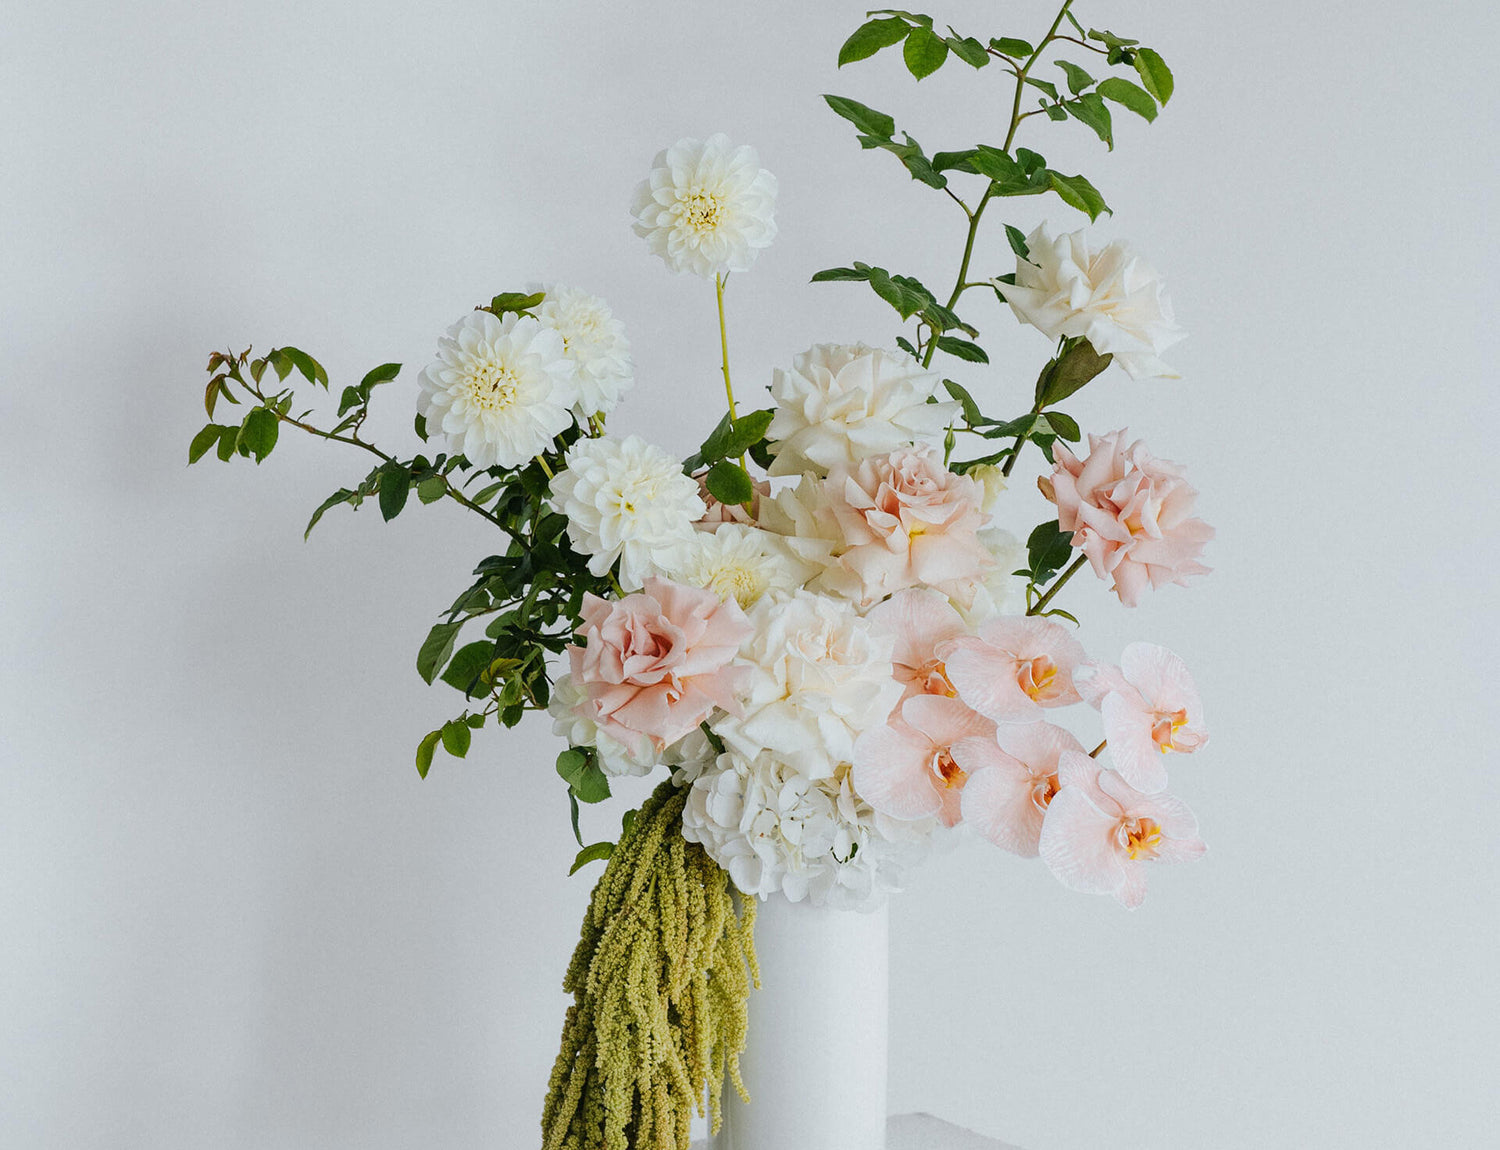 beautiful flowers on a vase